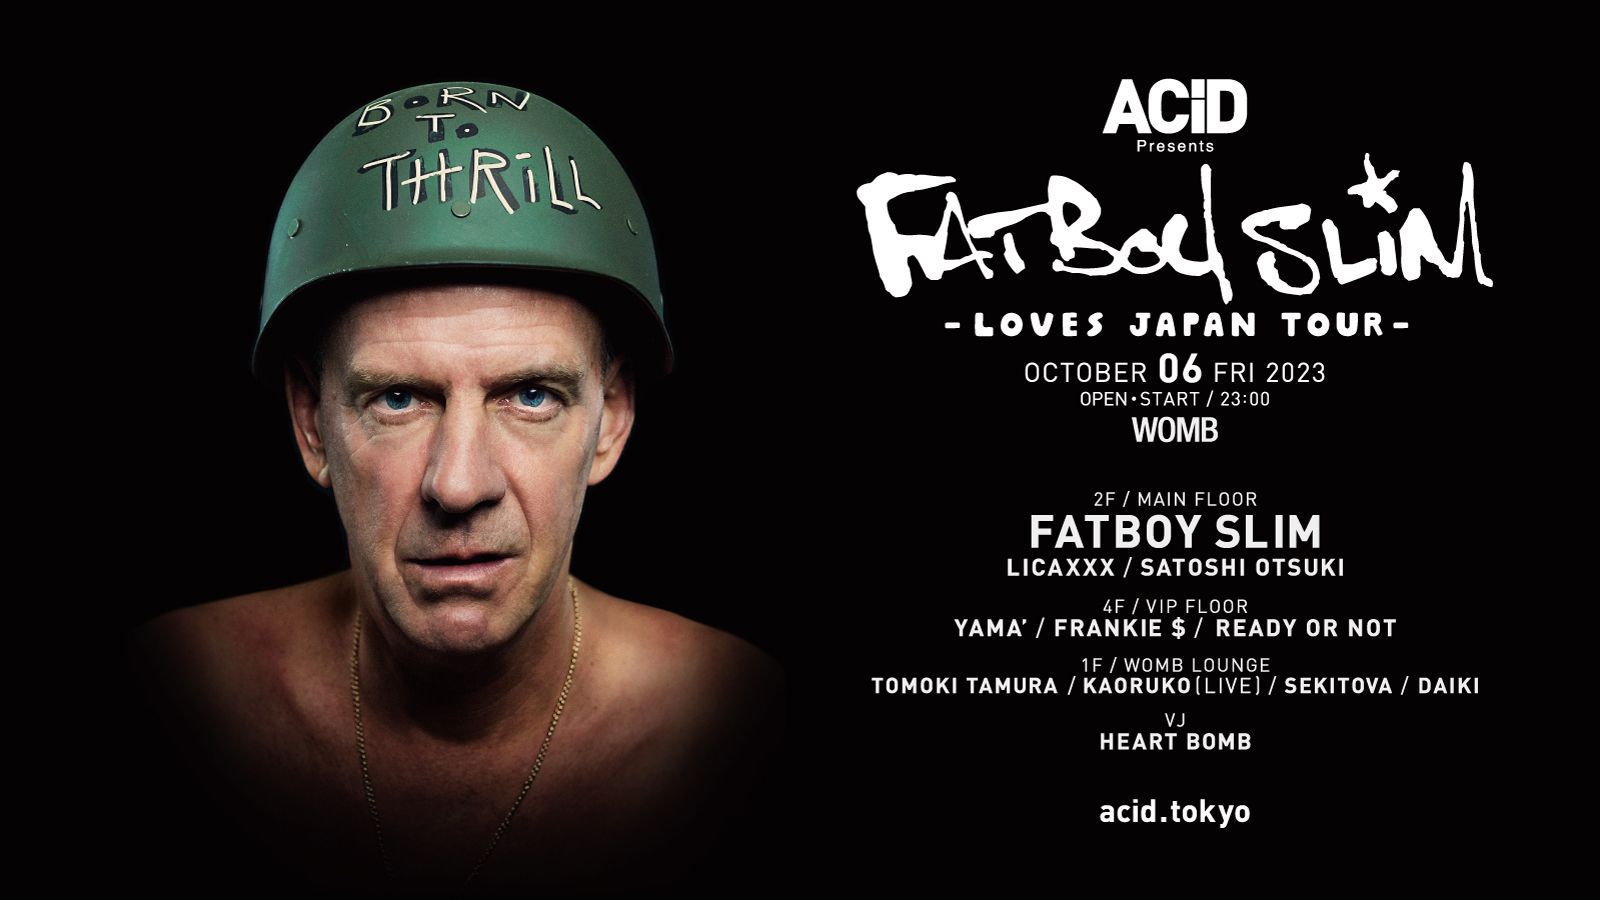 ACiD presents FATBOY SLIM LOVES JAPAN TOUR